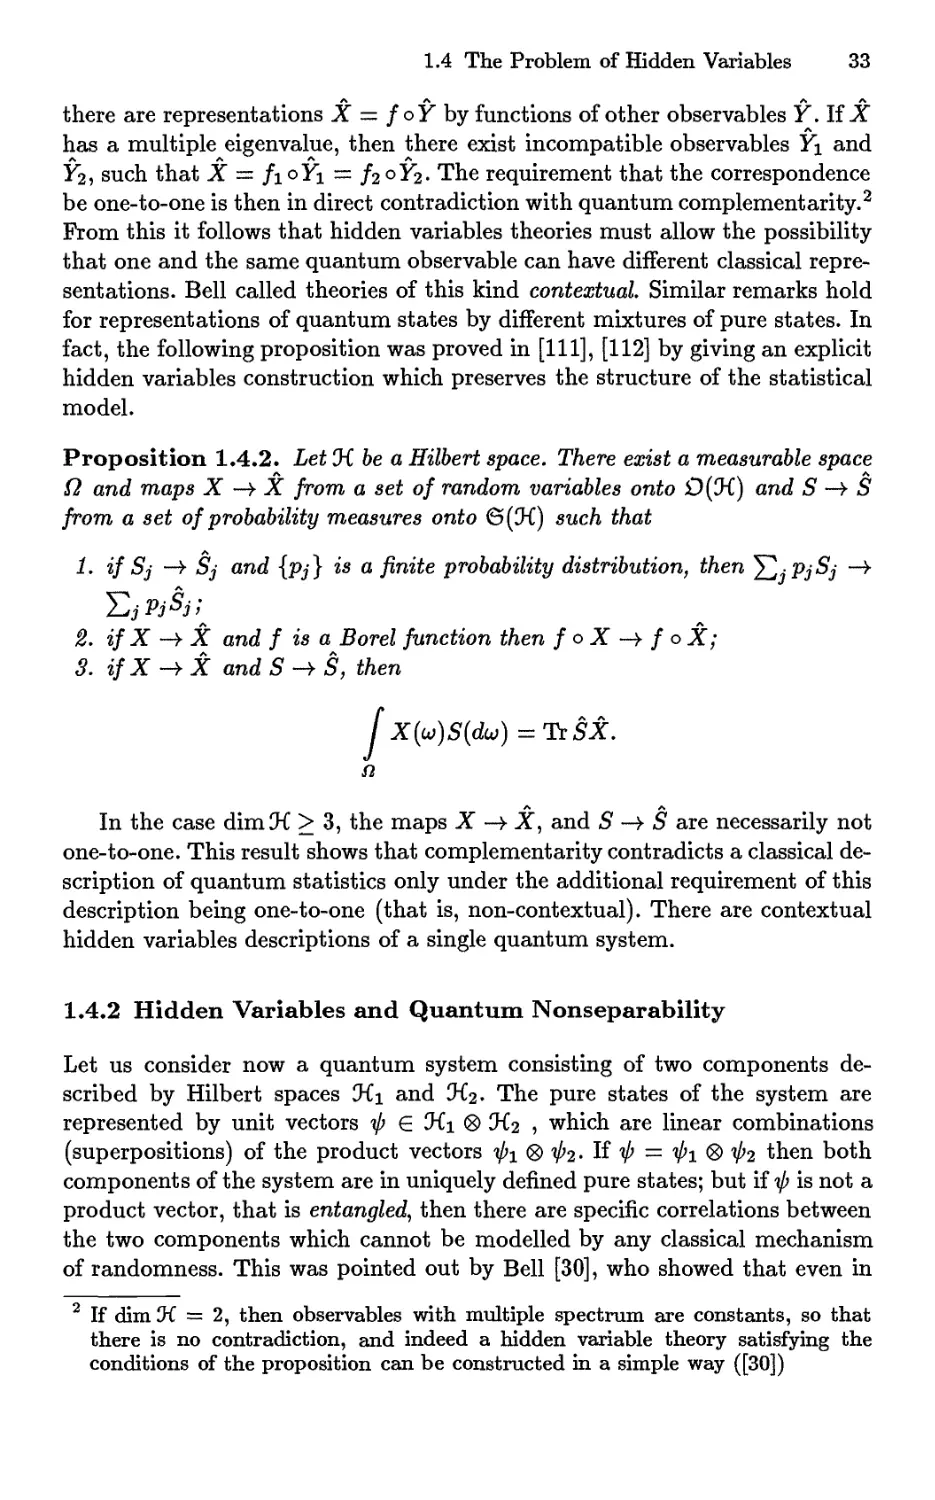 1.4.2 Hidden Variables and Quantum Nonseparability